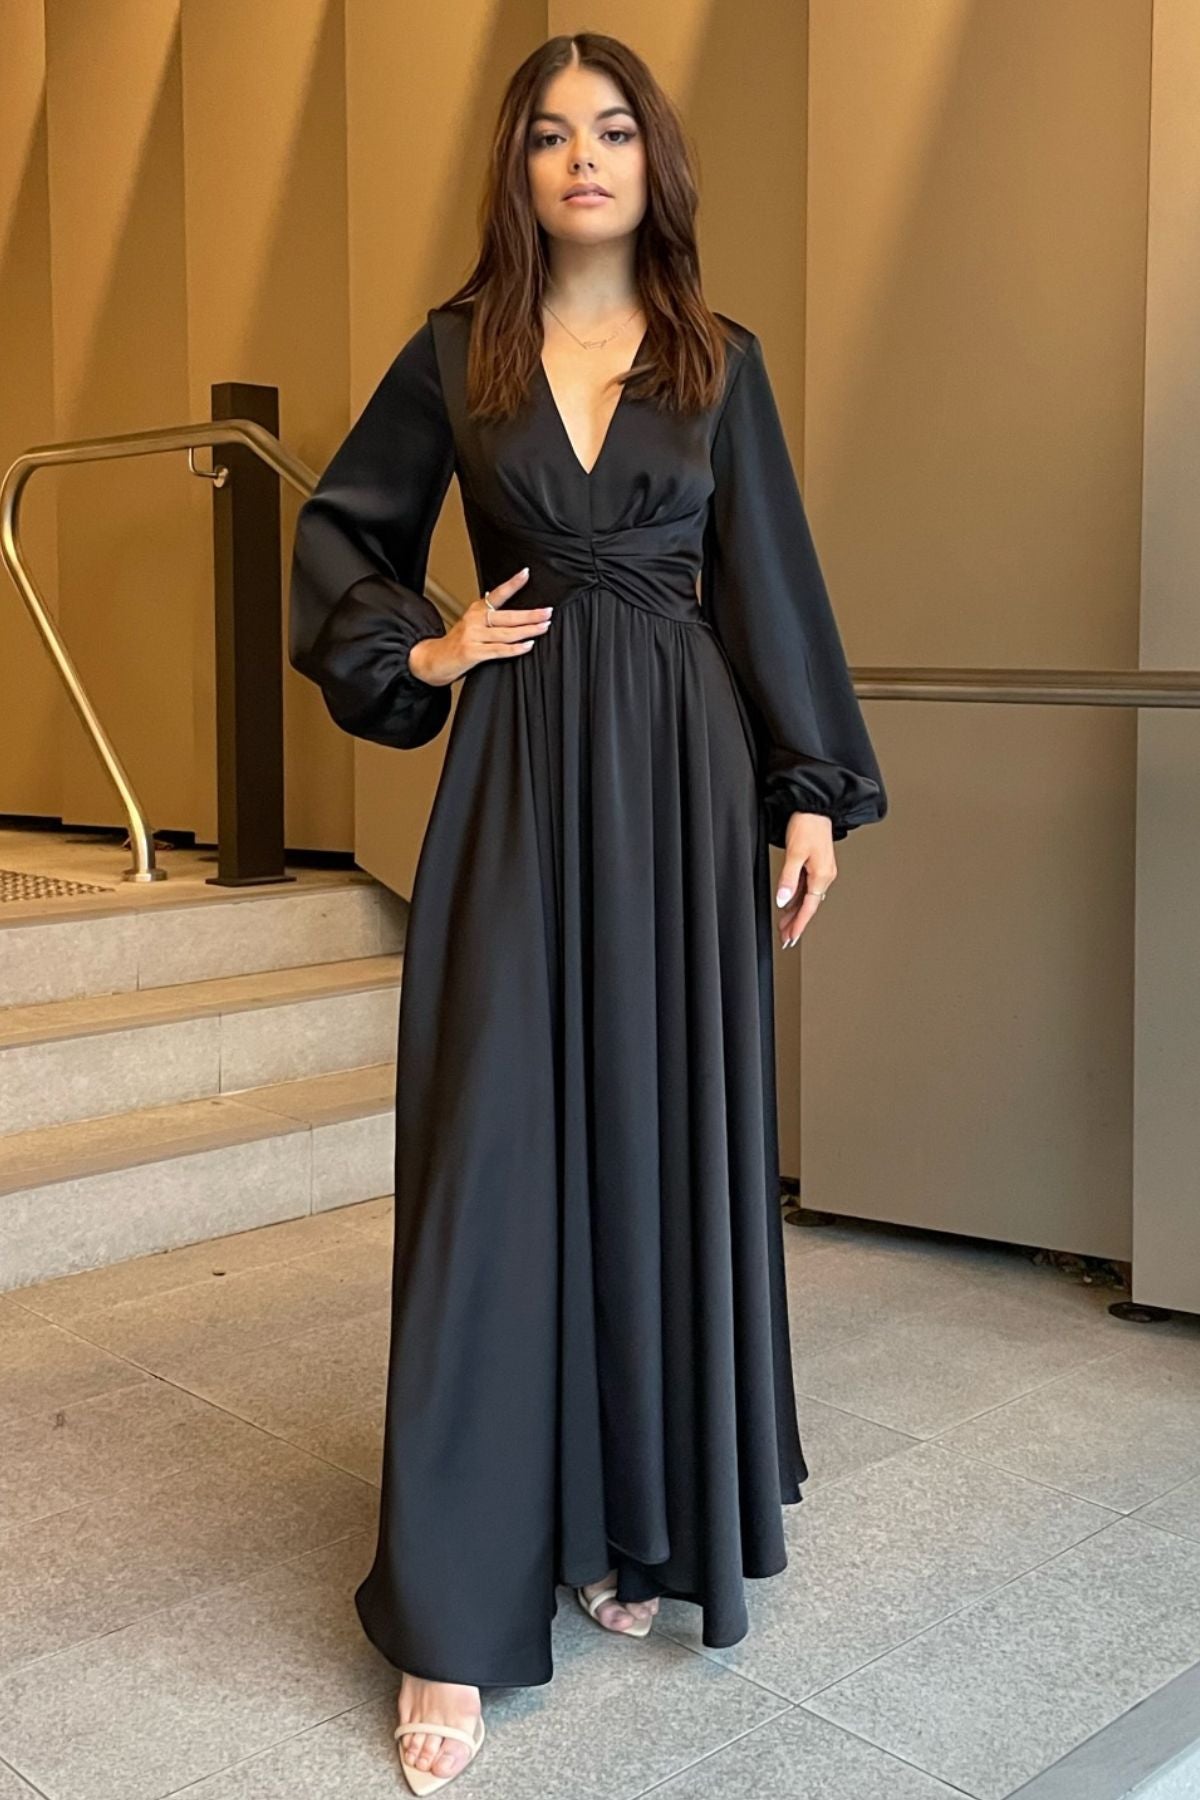 Pasduchas PASDUCHAS Lucia Sleeve Midi Dress (Black) - RRP $380 - USETHISFORWEBSITEPRODUCT_79.jpg